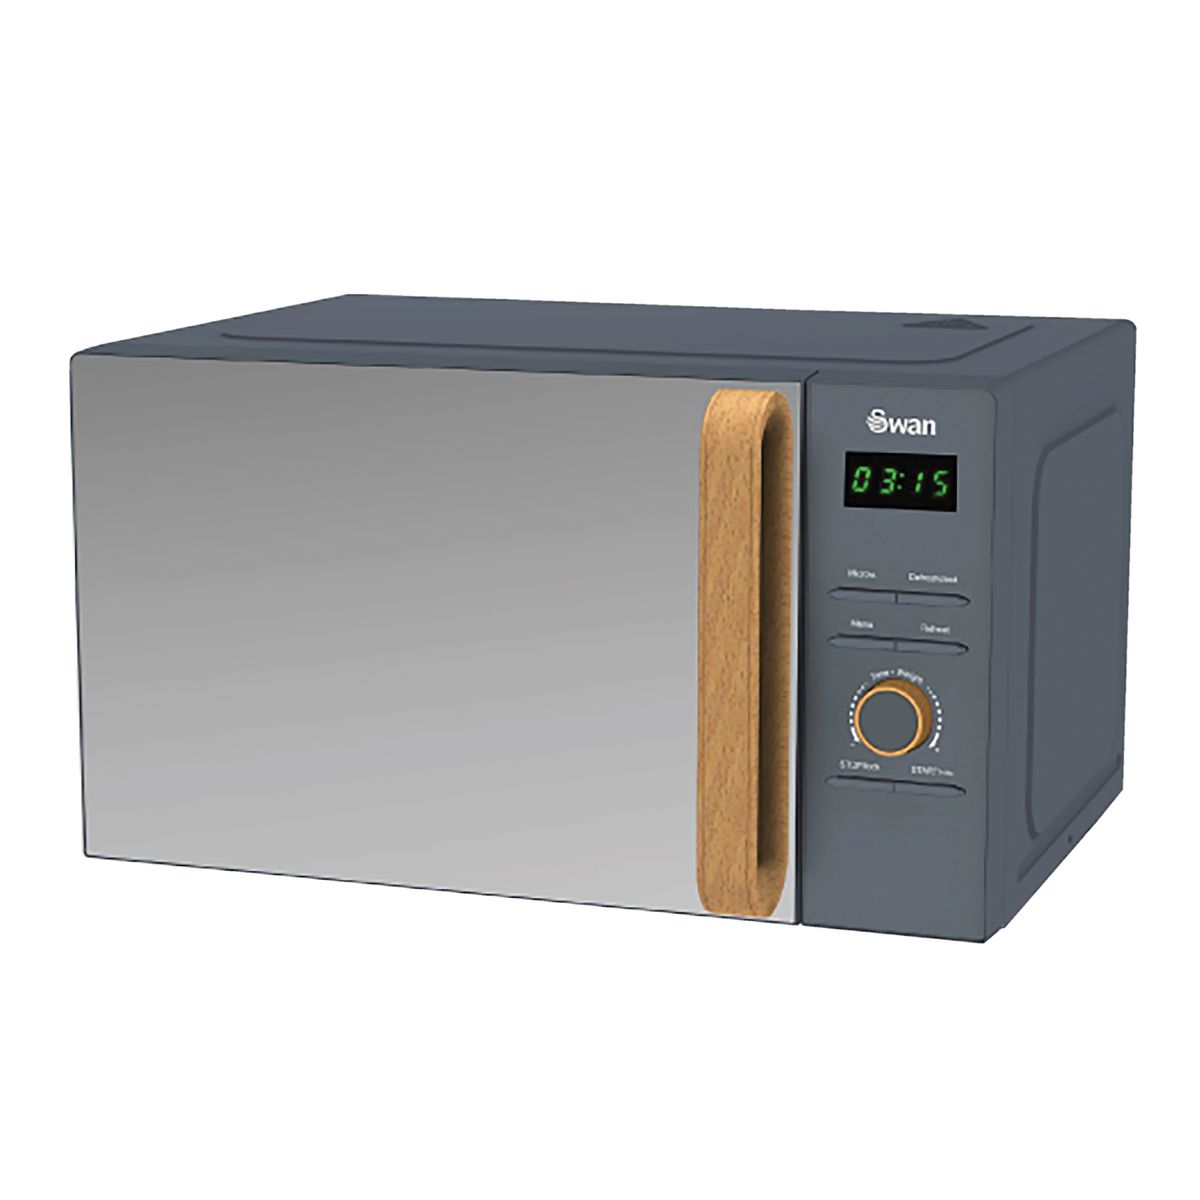 Swan 30 Litre Digital Microwave Oven